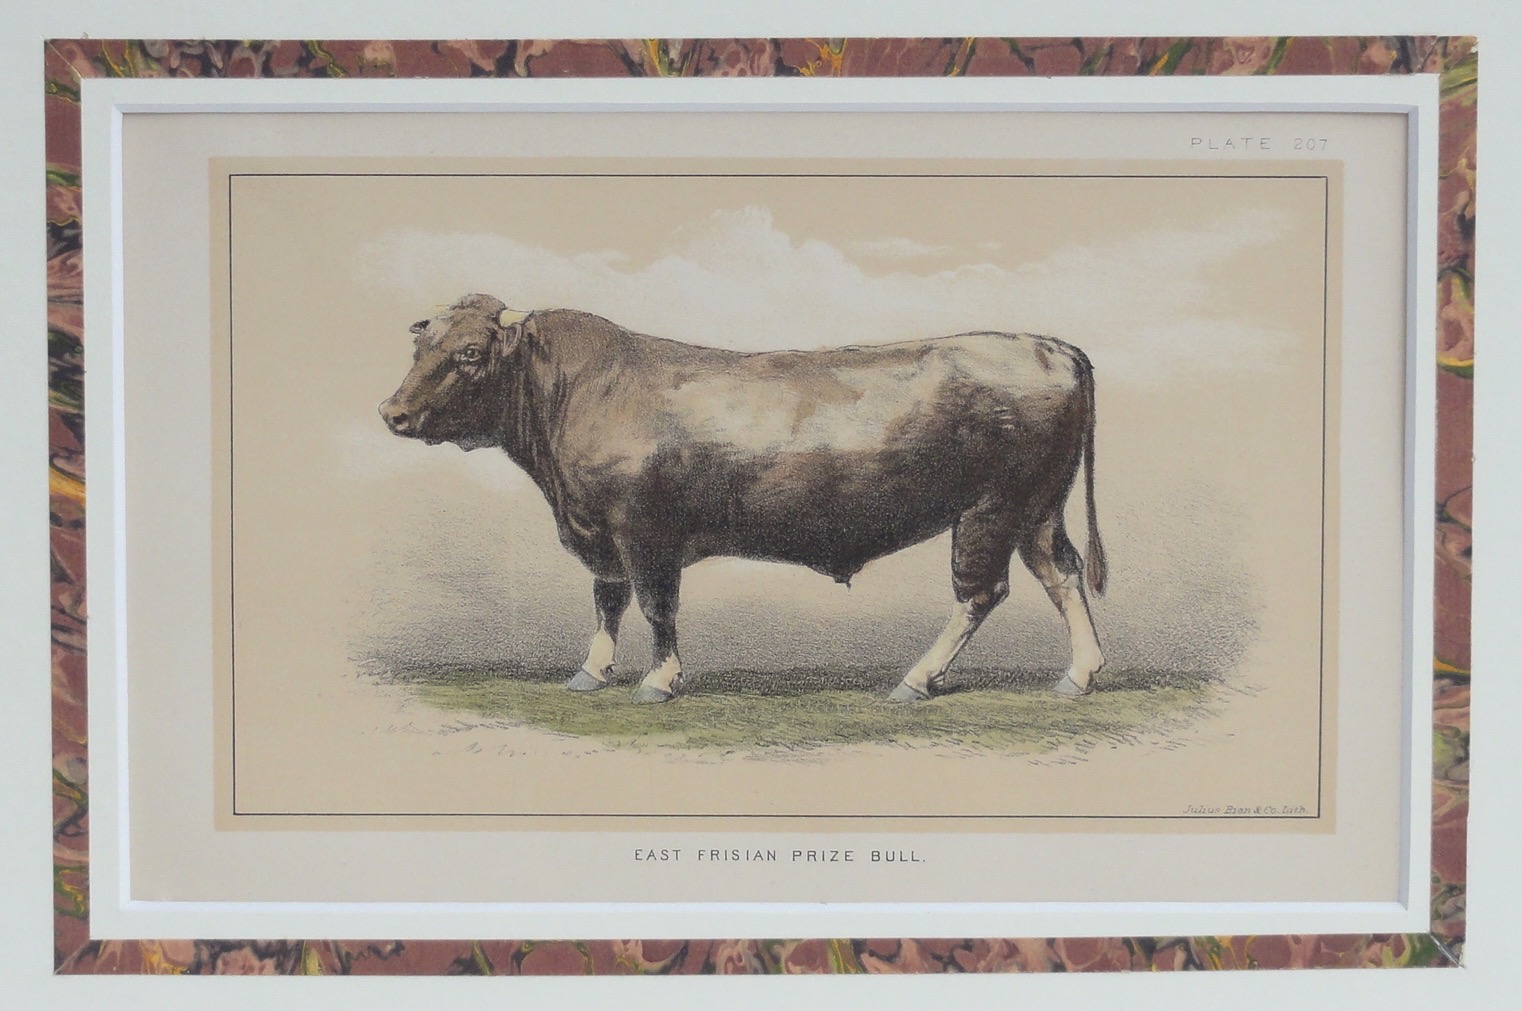 East Frisian Prize Bull